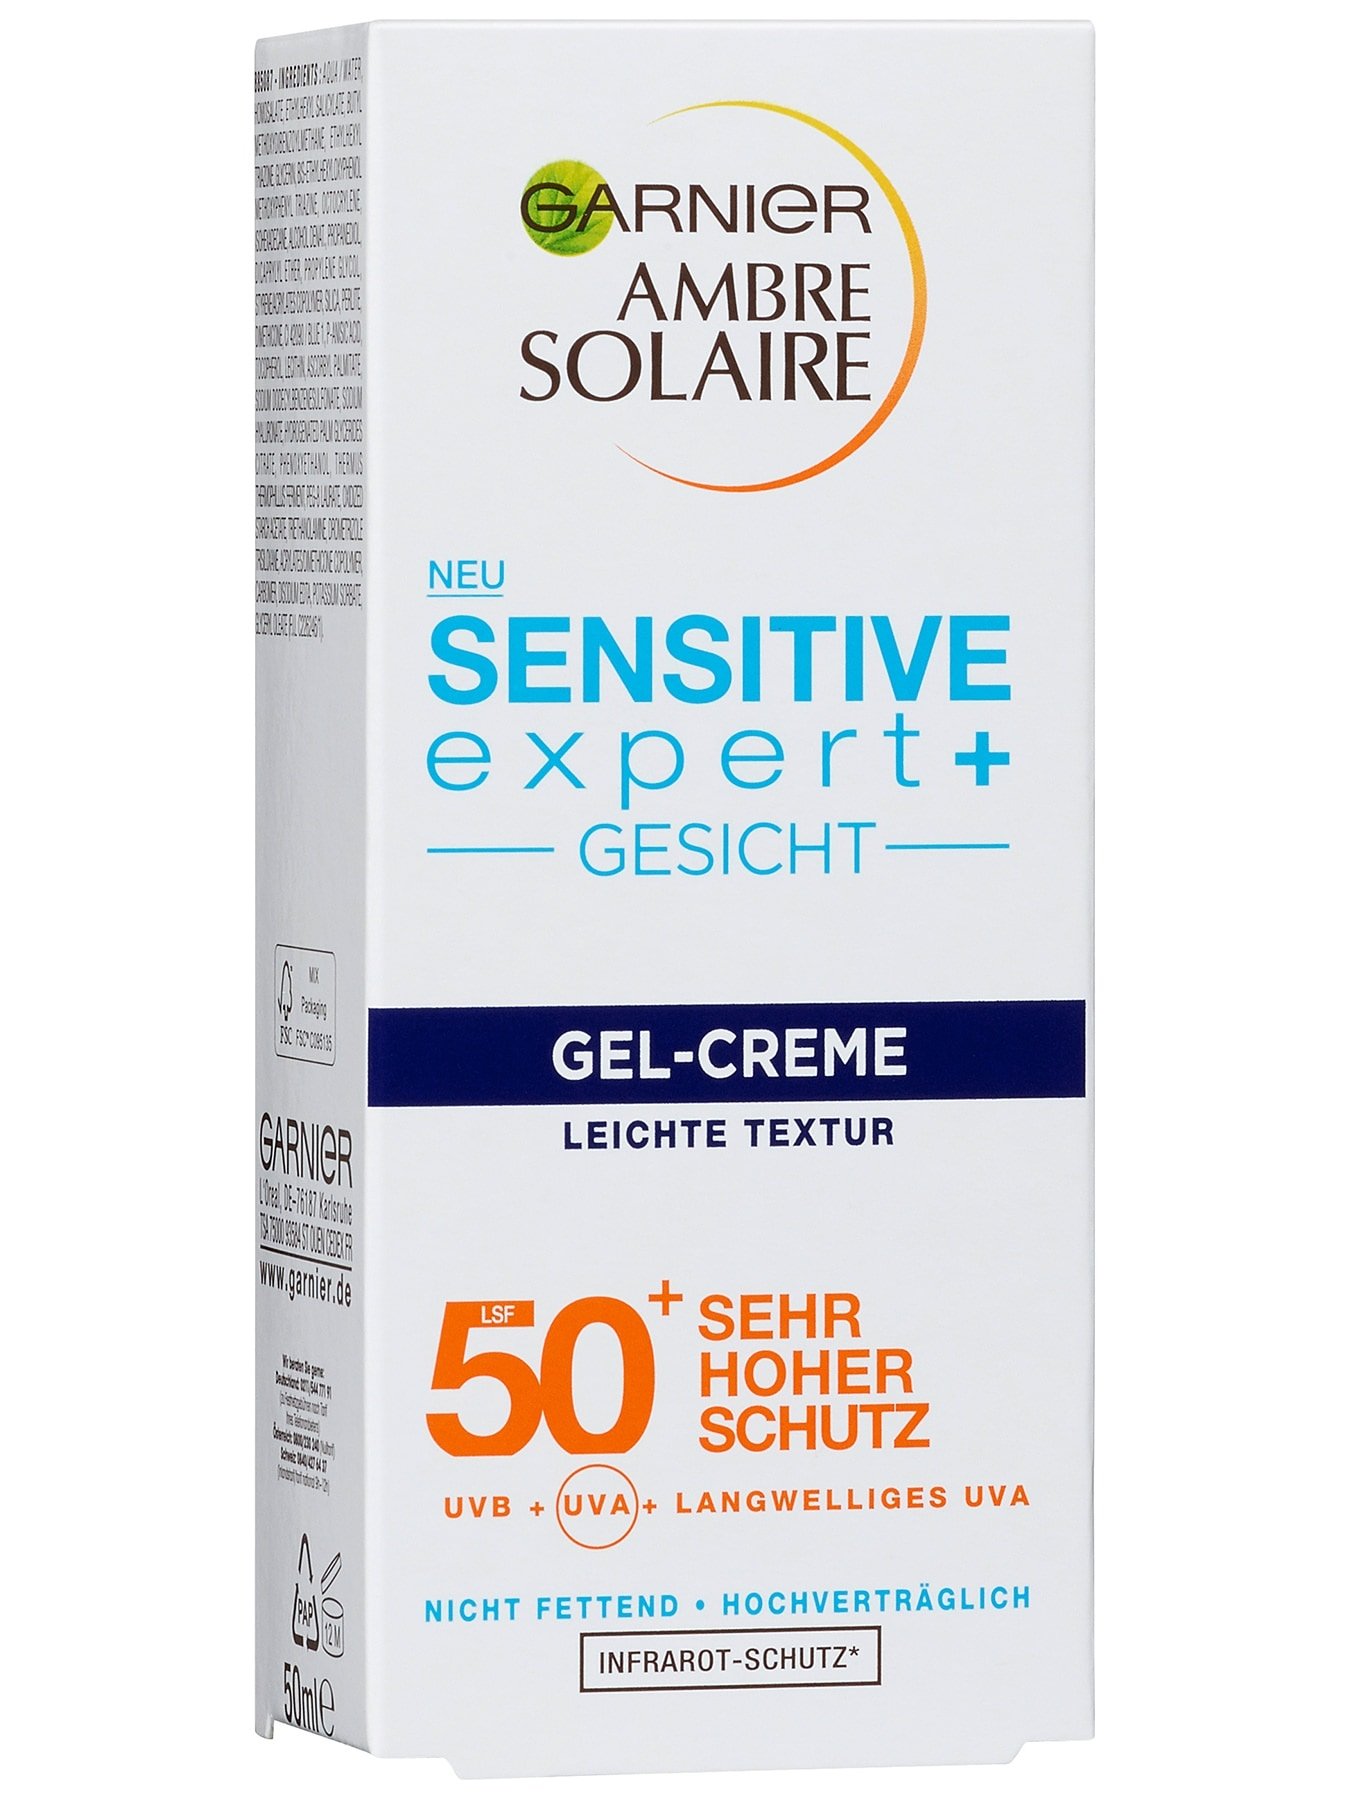 Ambre Solaire Sensitive expert+ Gesicht Gel-Creme LSF 50+ -  Verpackung Vorderseite